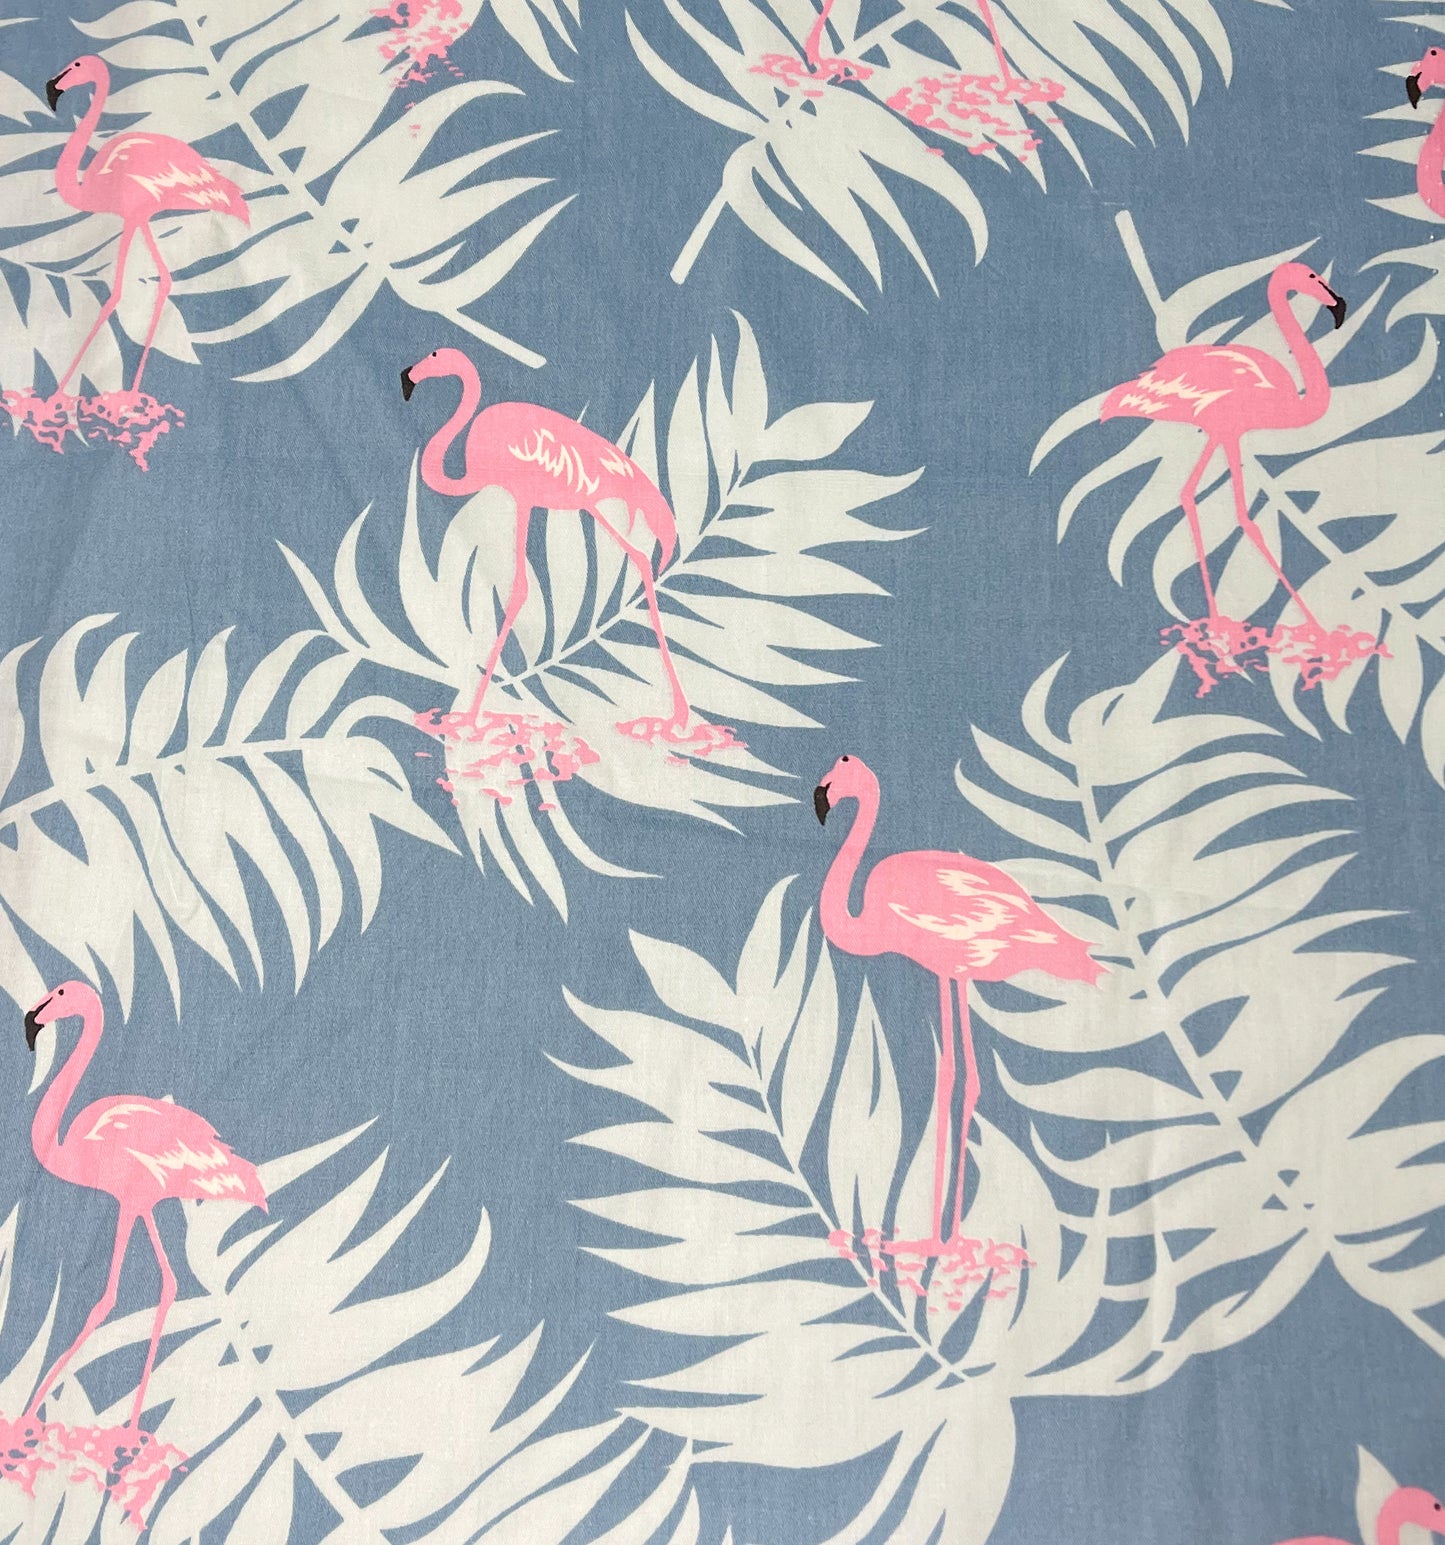 Flamingos on blue